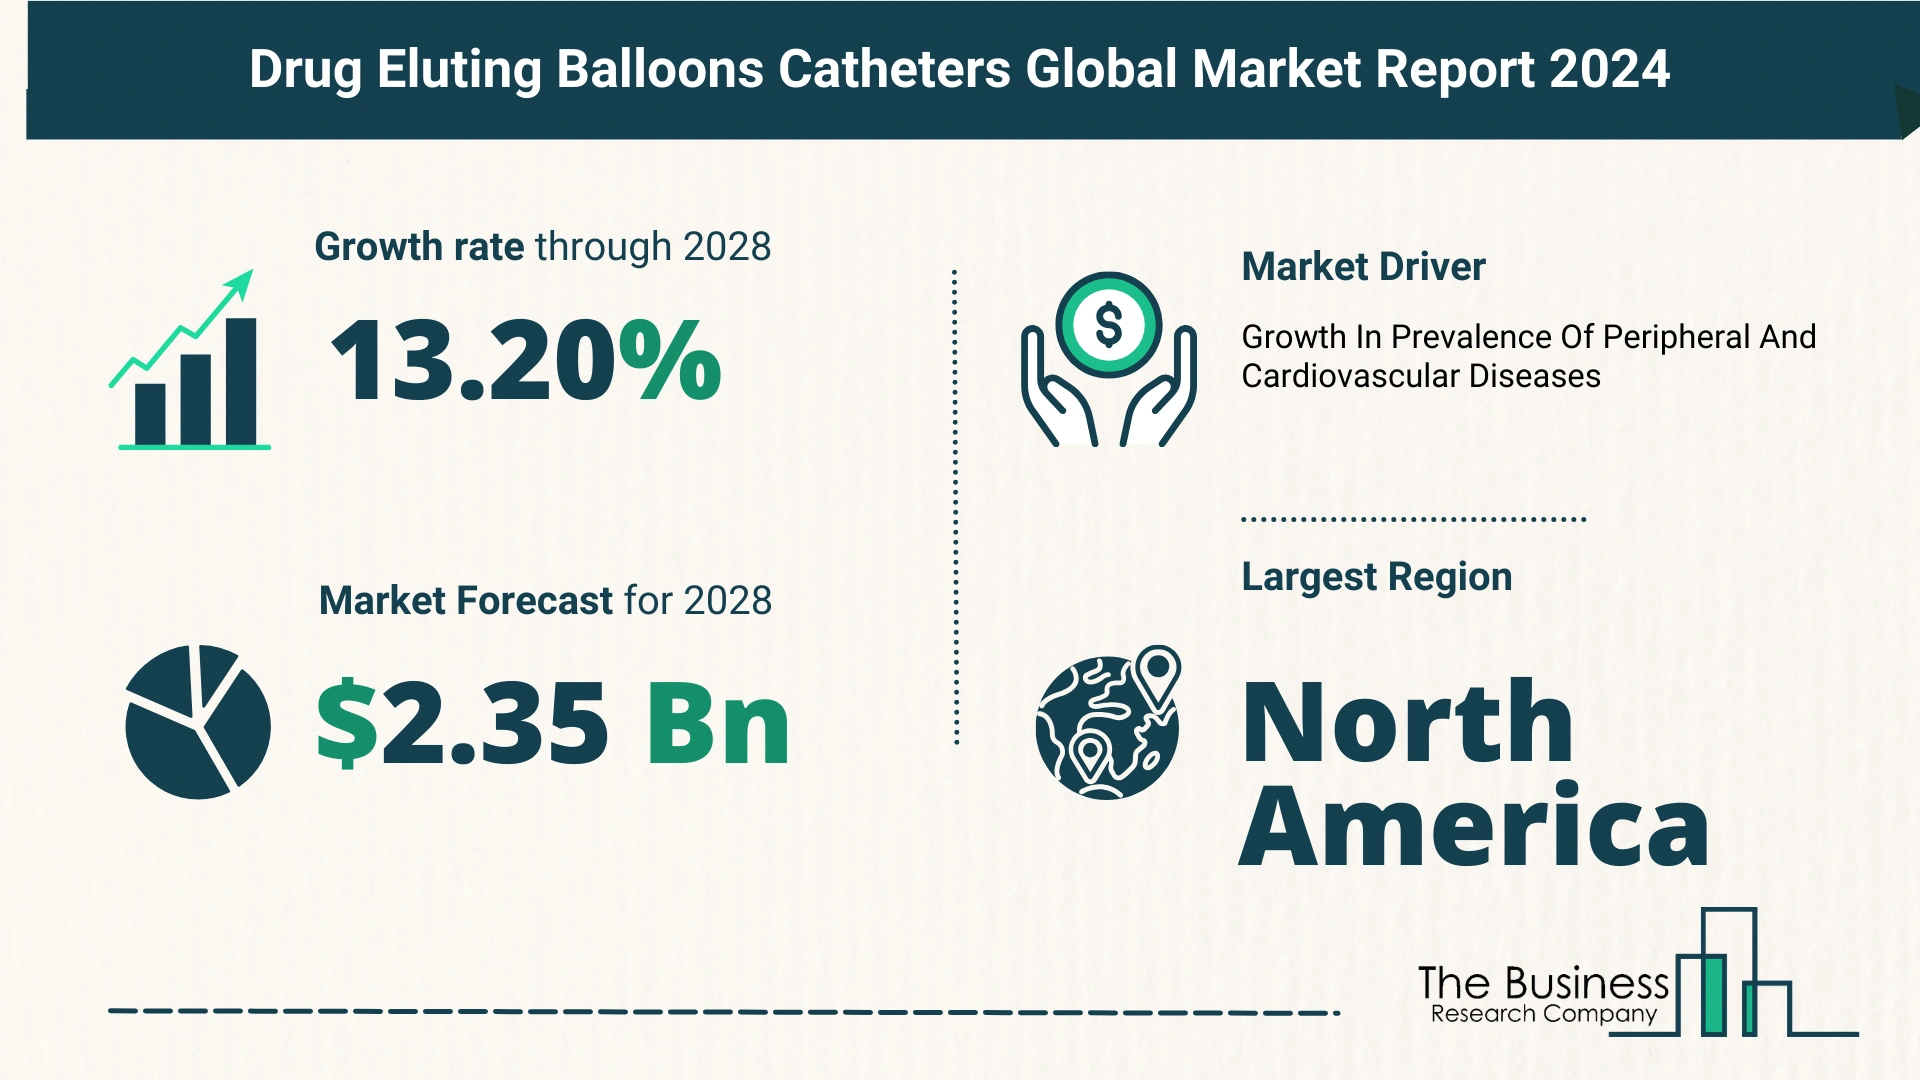 Global Drug Eluting Balloons Catheters Market